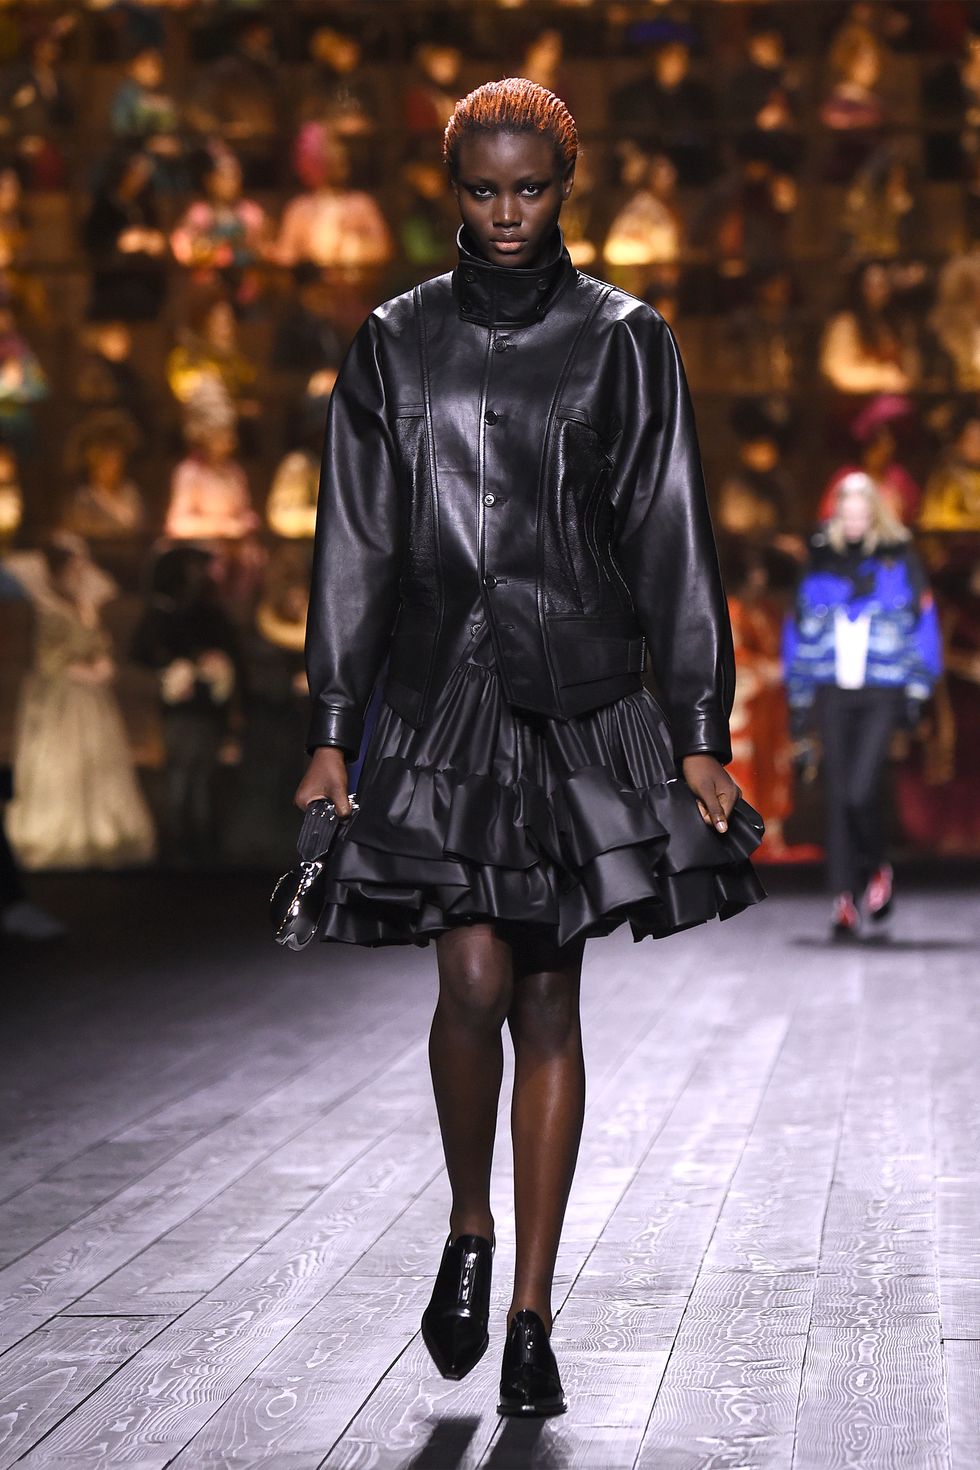 Emma Chamberlain - Louis Vuitton Fall/Winter 2020/21 fashion show - 03.03. 2020 